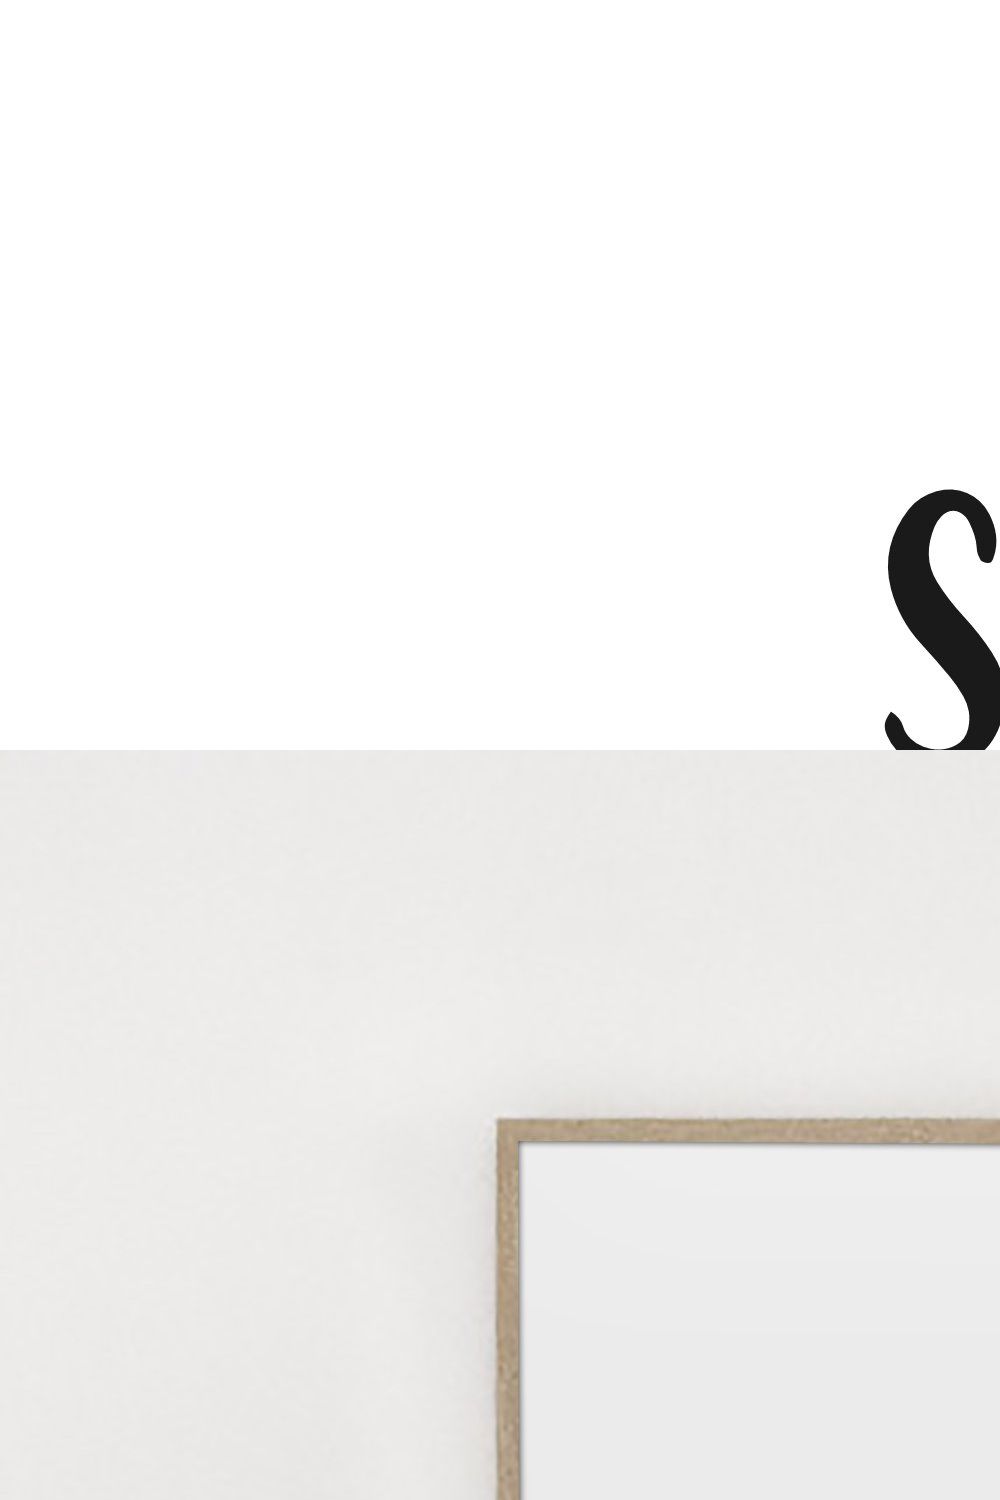 Sonata — A Handwritten Semi-script pinterest preview image.